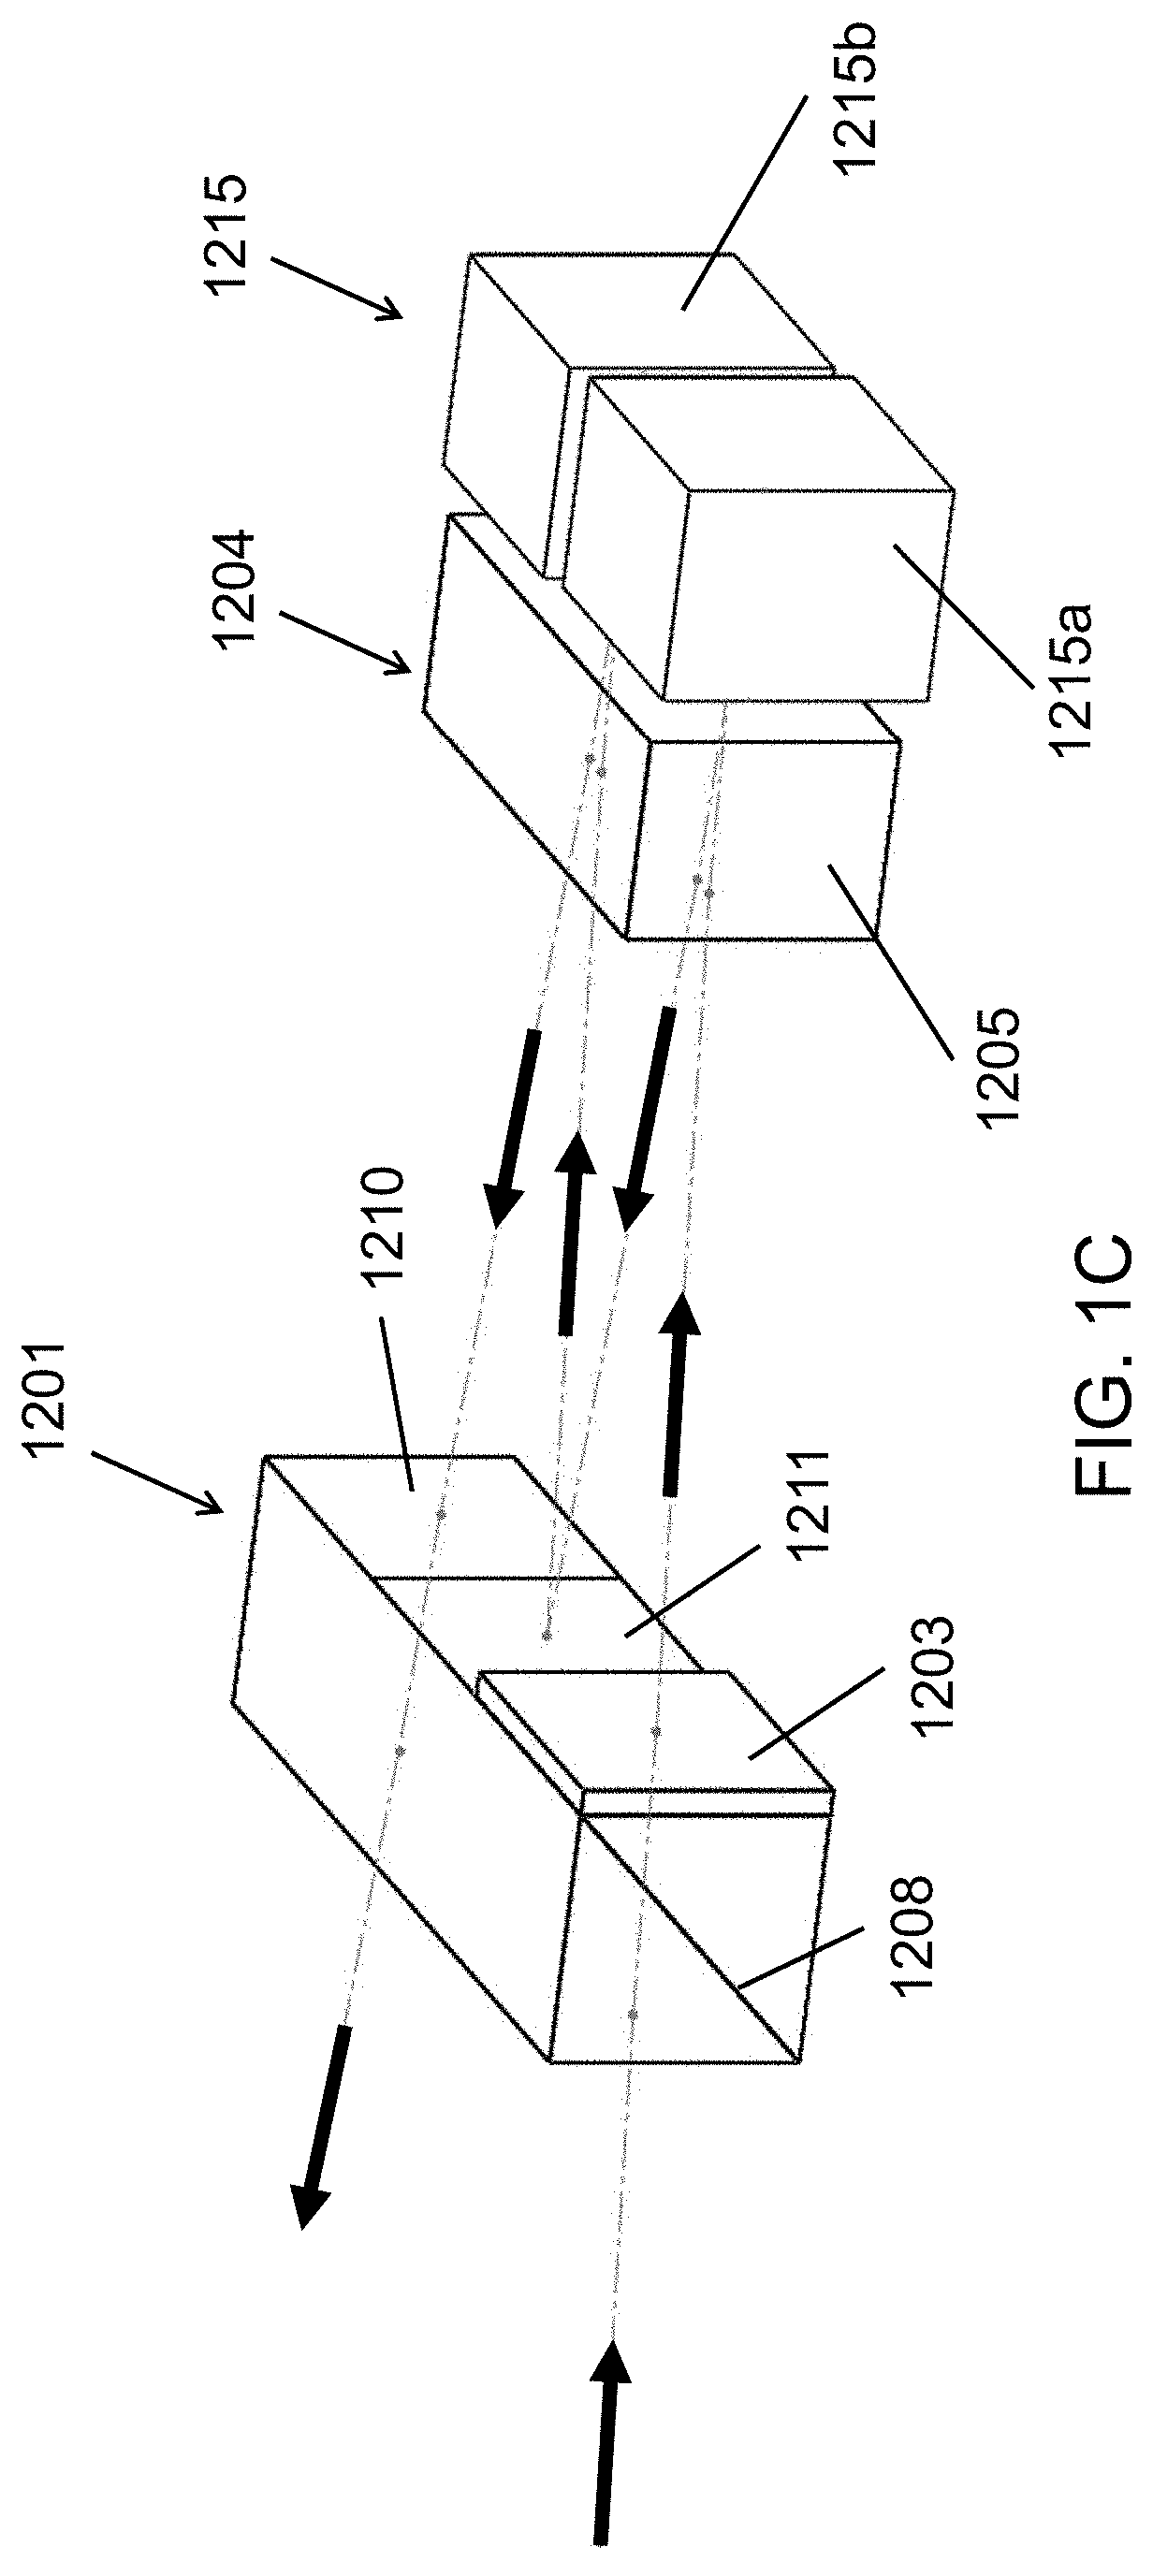 Single and multi-stage high power optical isolators using a single polarizing element